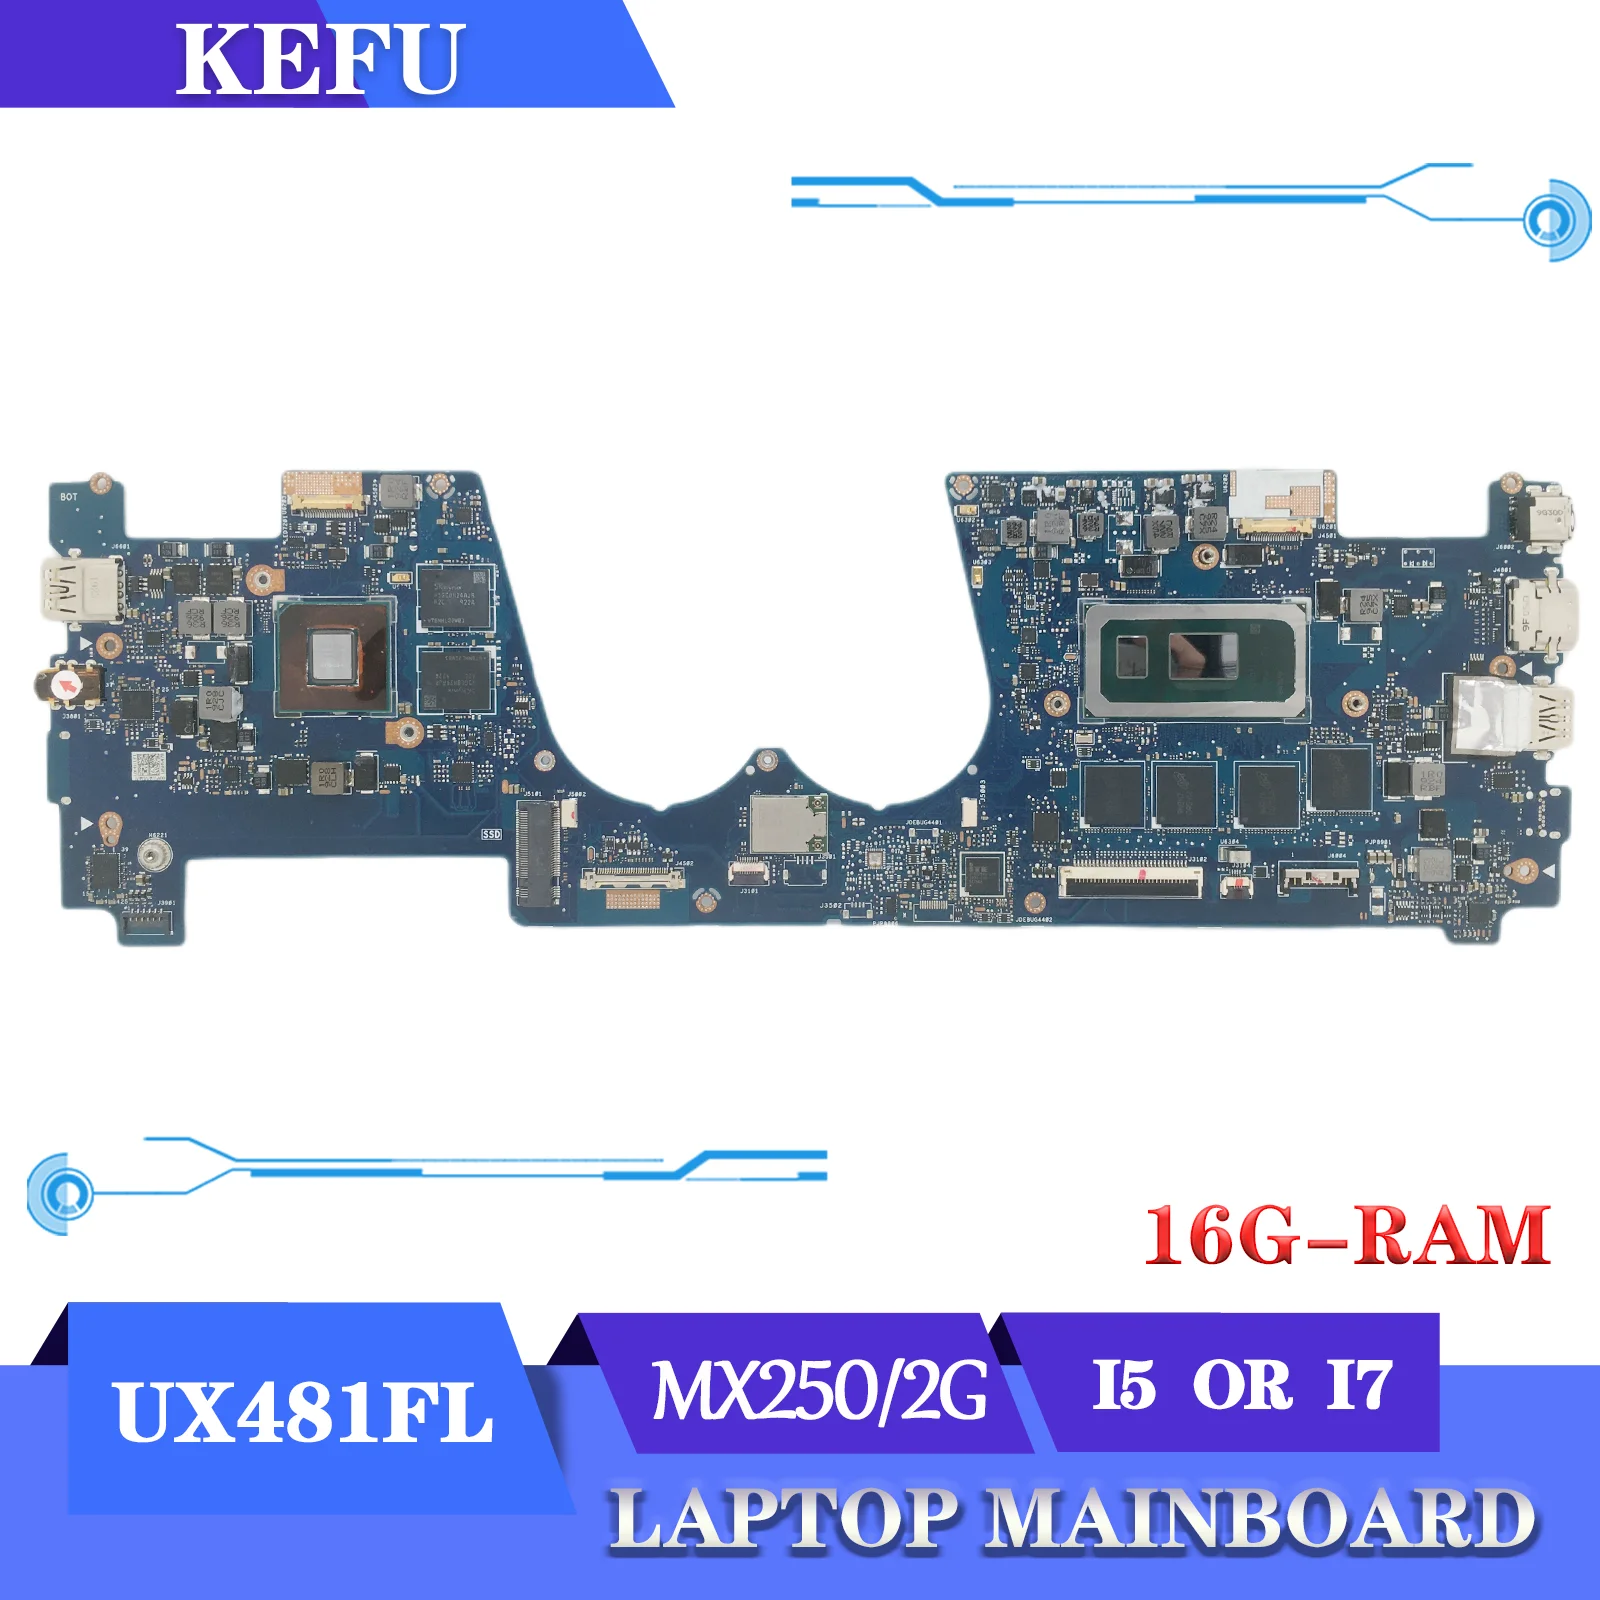 

UX4000 Mainboard For ASUS Zenbook Duo UX481 UX481FL UX481F UX481FLY Laptop Motherboard I5-10210U I7-10510U MX250/2G 16GB-RAM